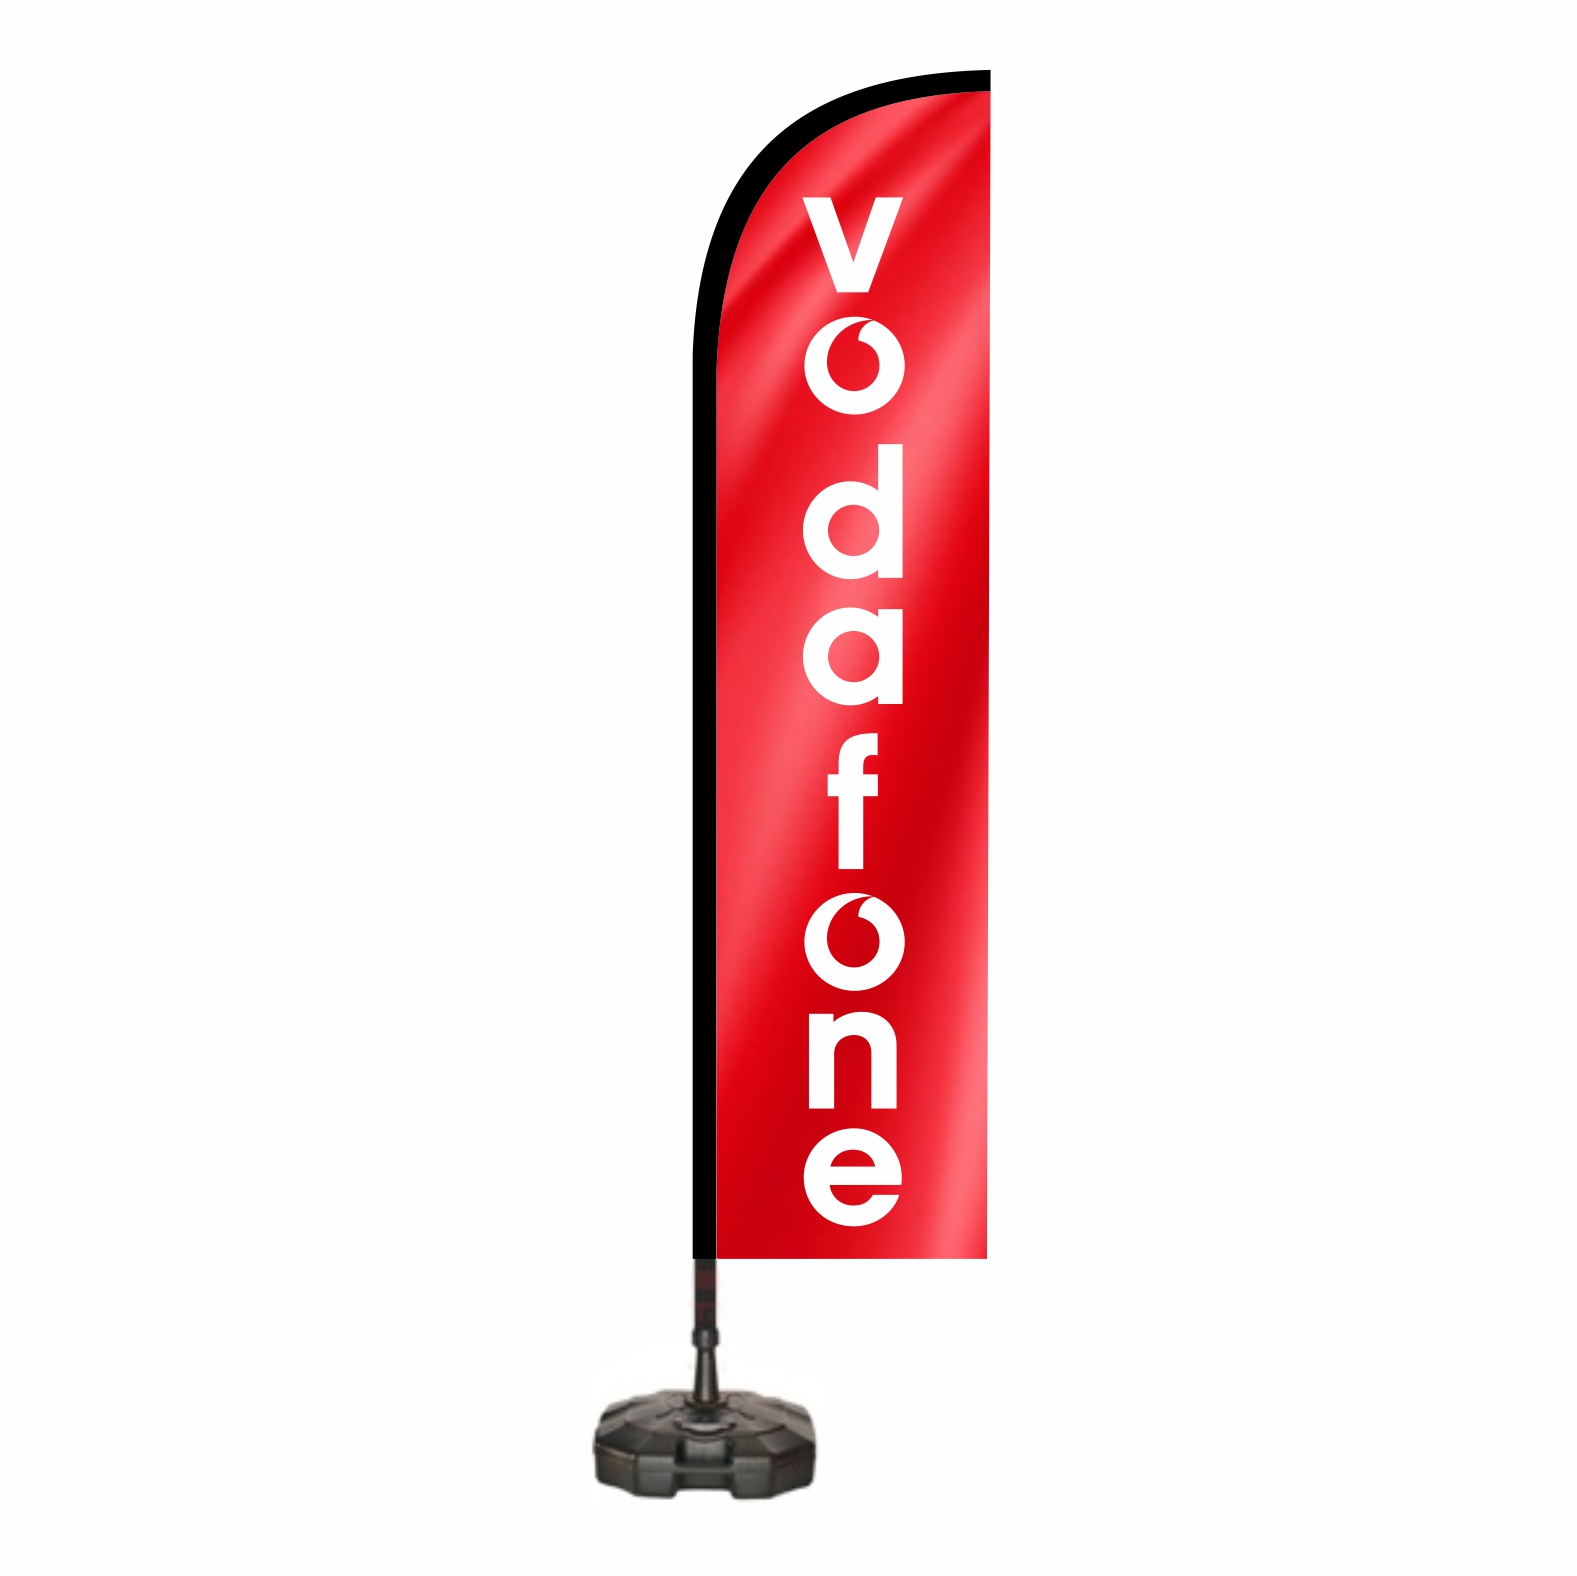 Vodafone Yelken Bayra